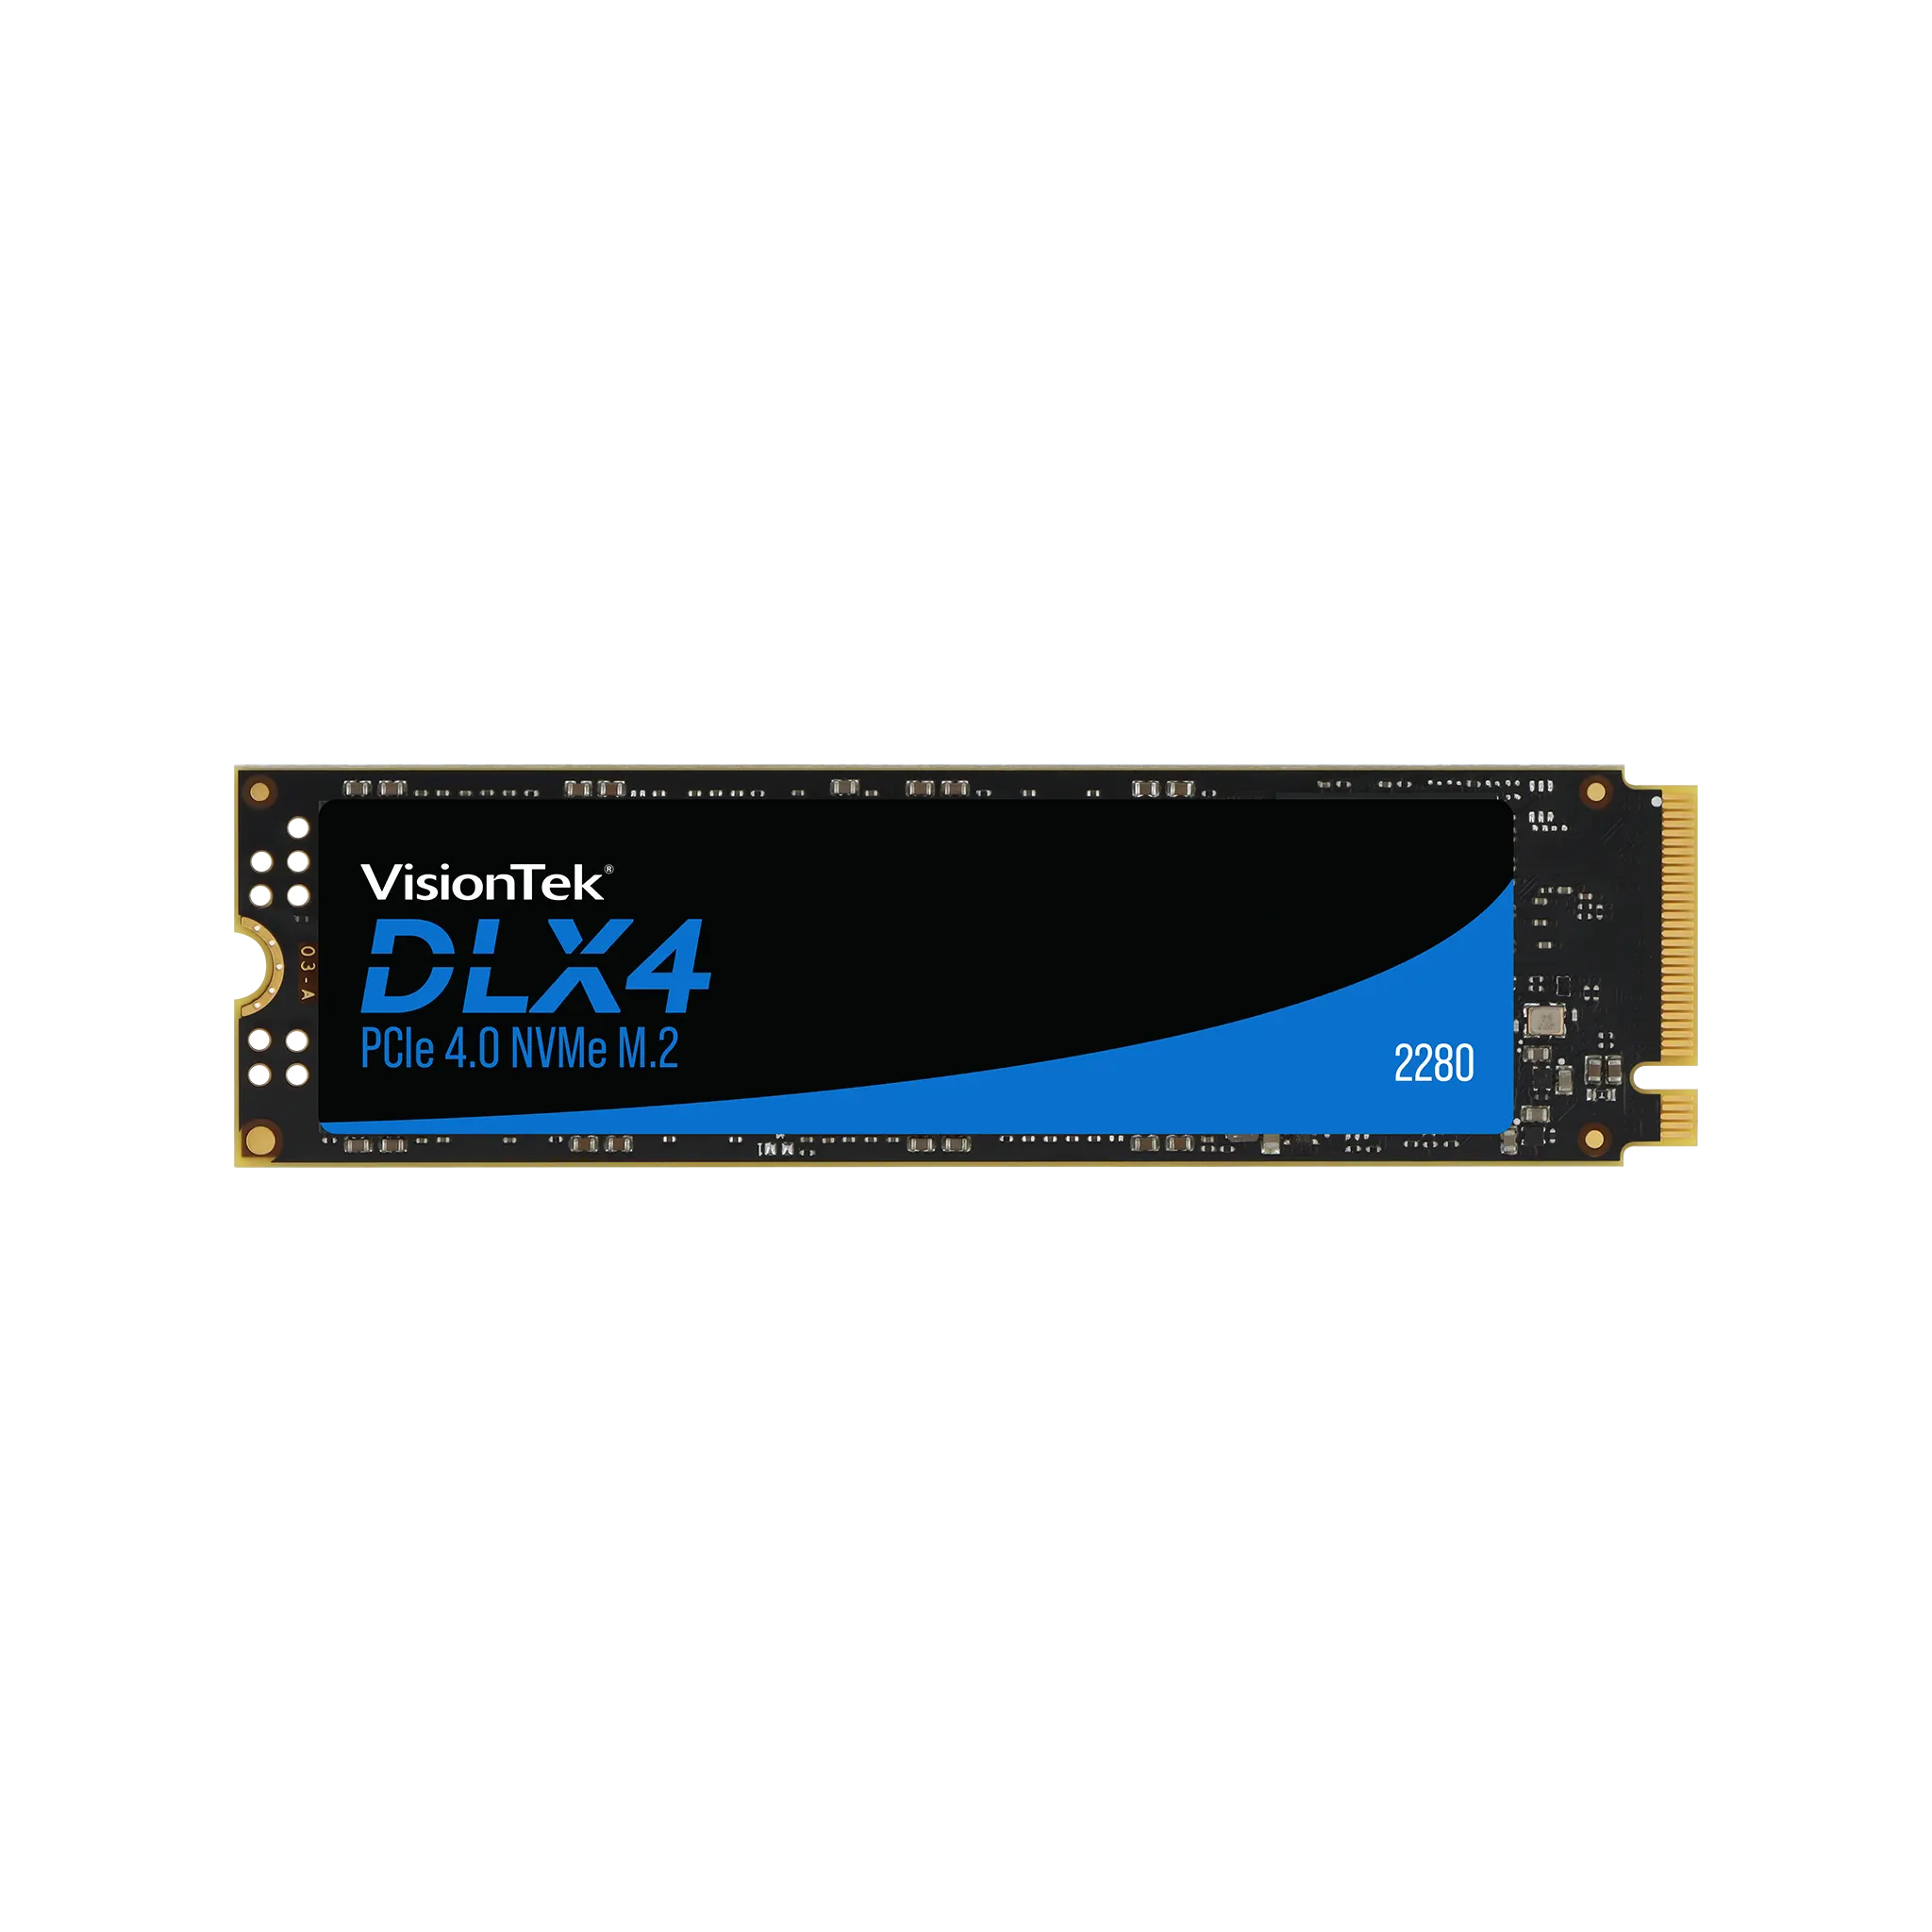 VisionTek DLX4 2280 M.2 PCIe 4.0 x4 SSD (NVMe) OPAL 2.0 SED